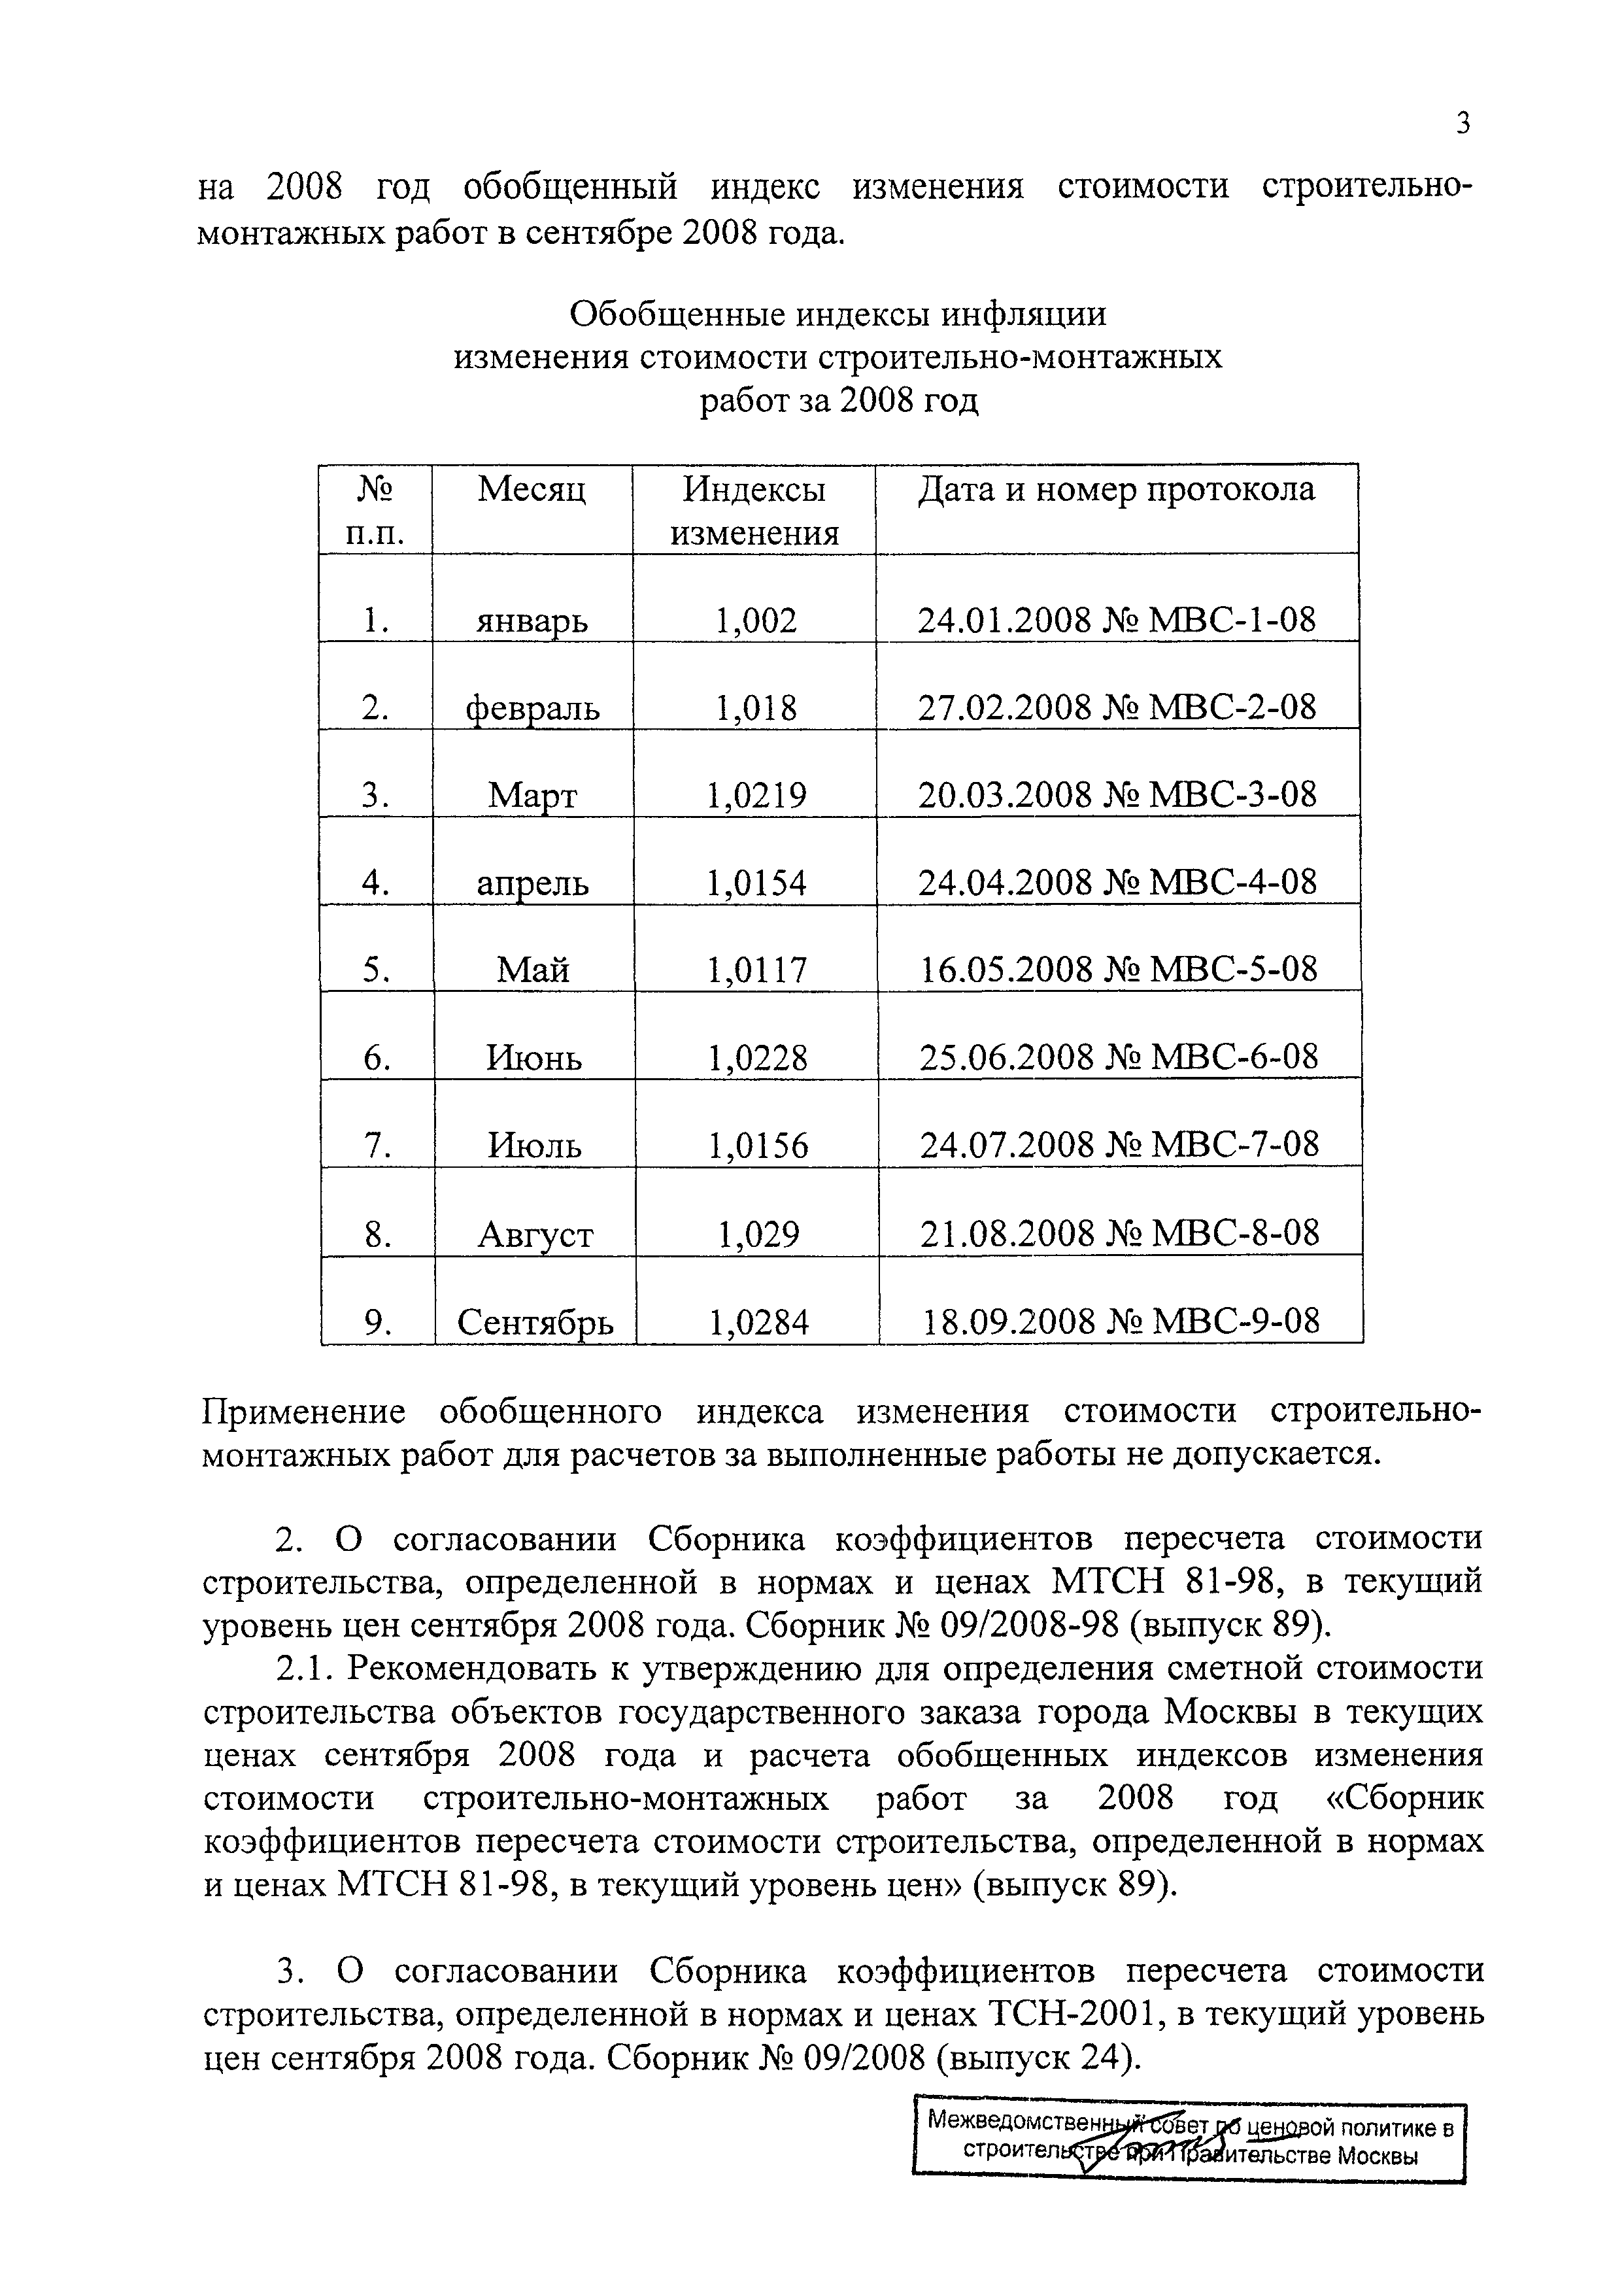 Протокол МВС-9-08